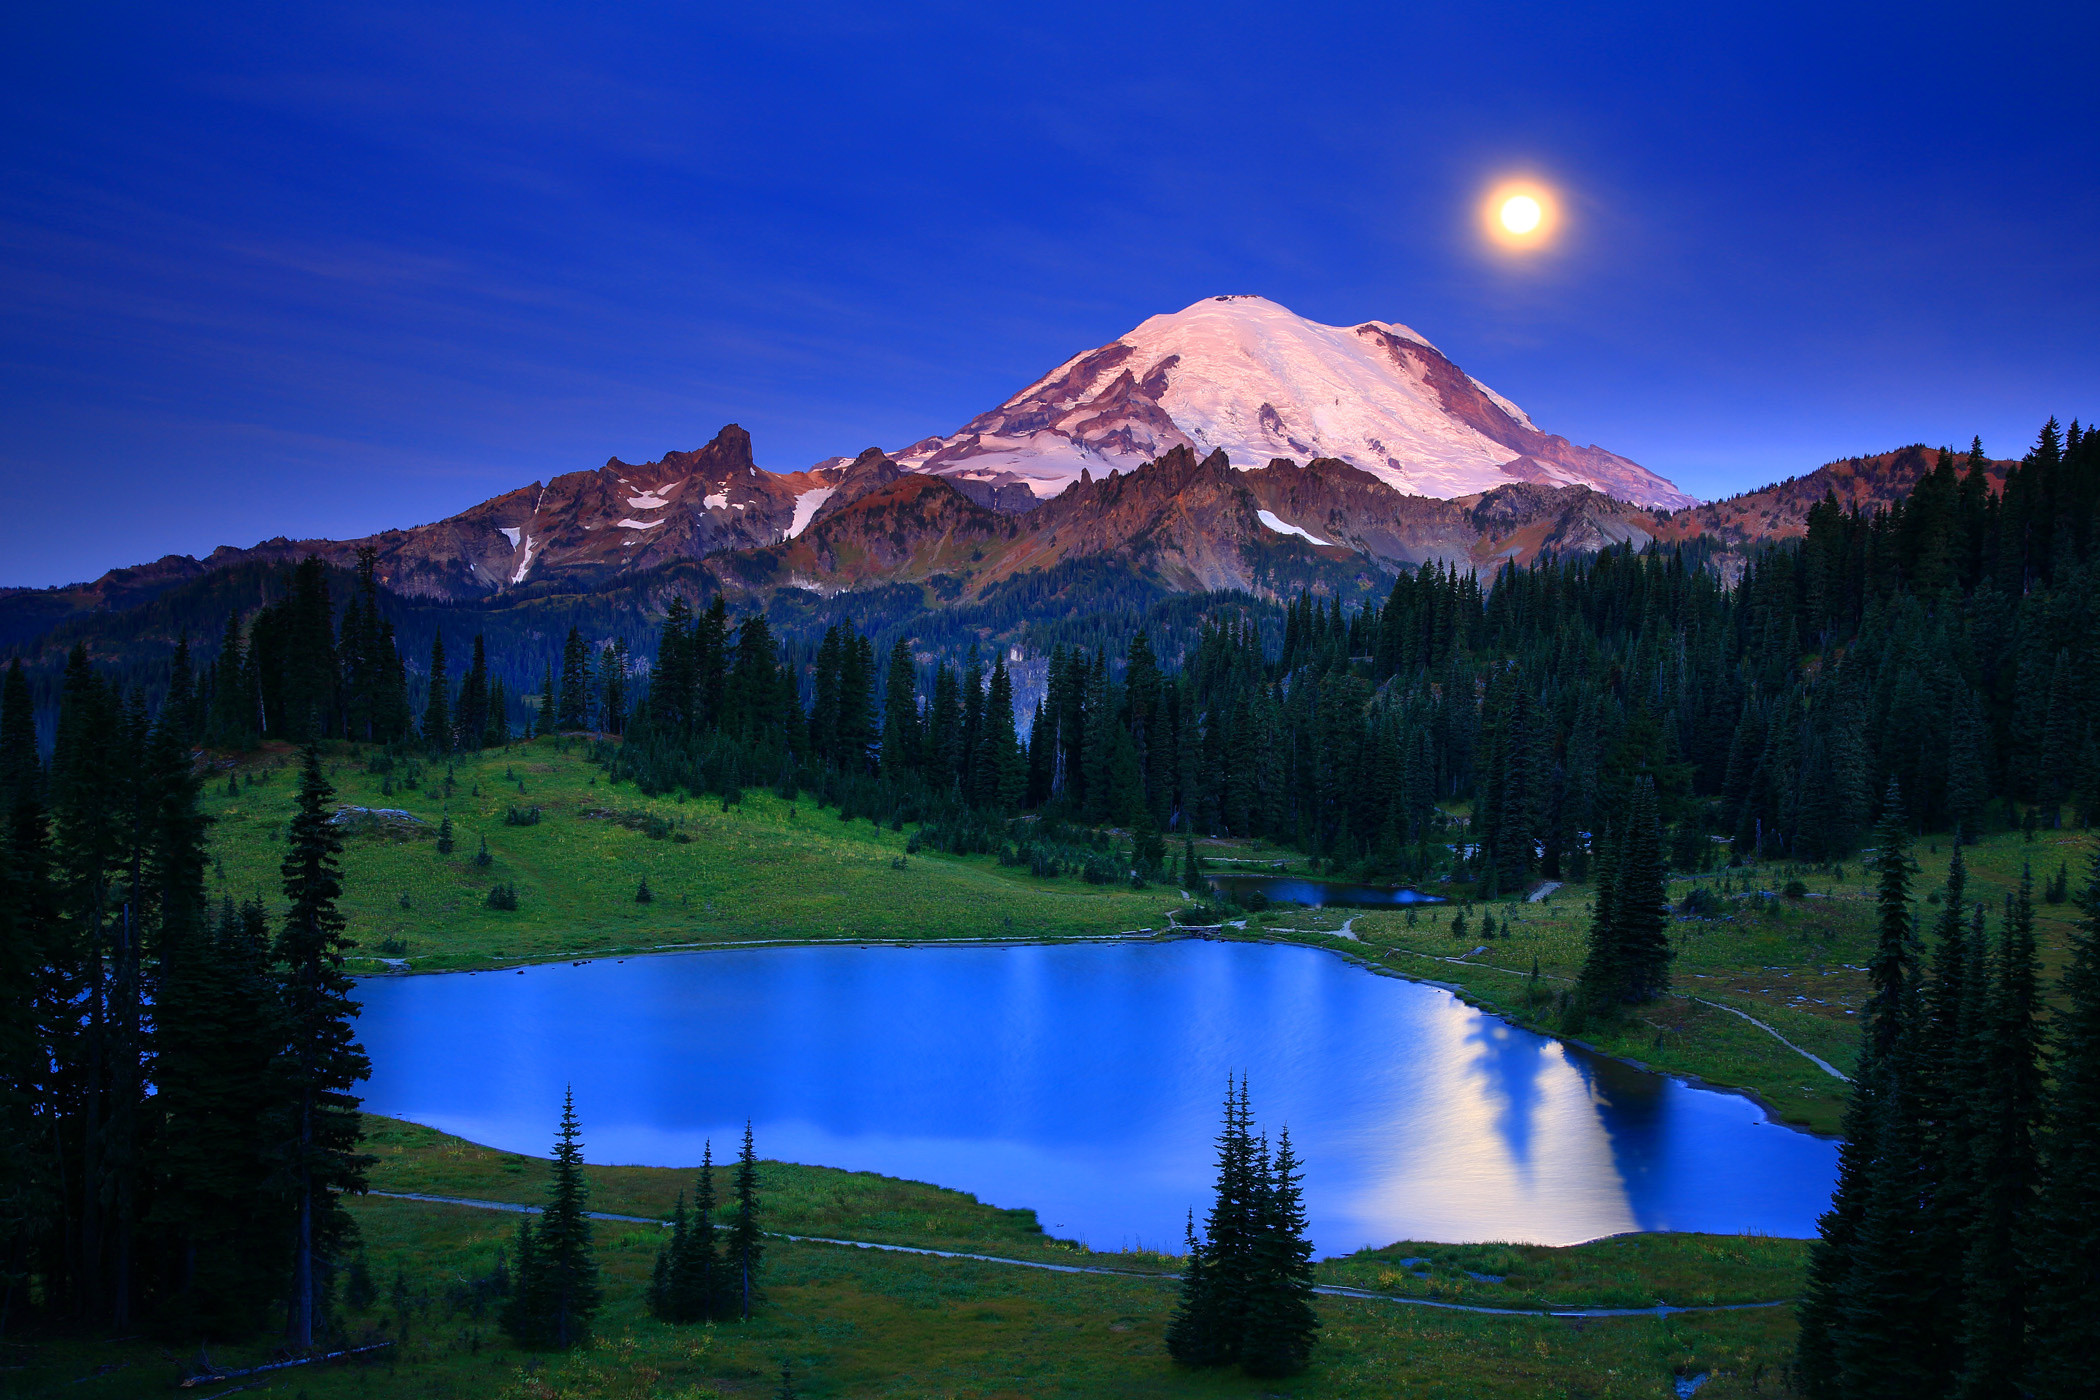 2100x1400 Washington lake mountains landscape moon moonlight night reflection  wallpaper |  | 153396 | WallpaperUP